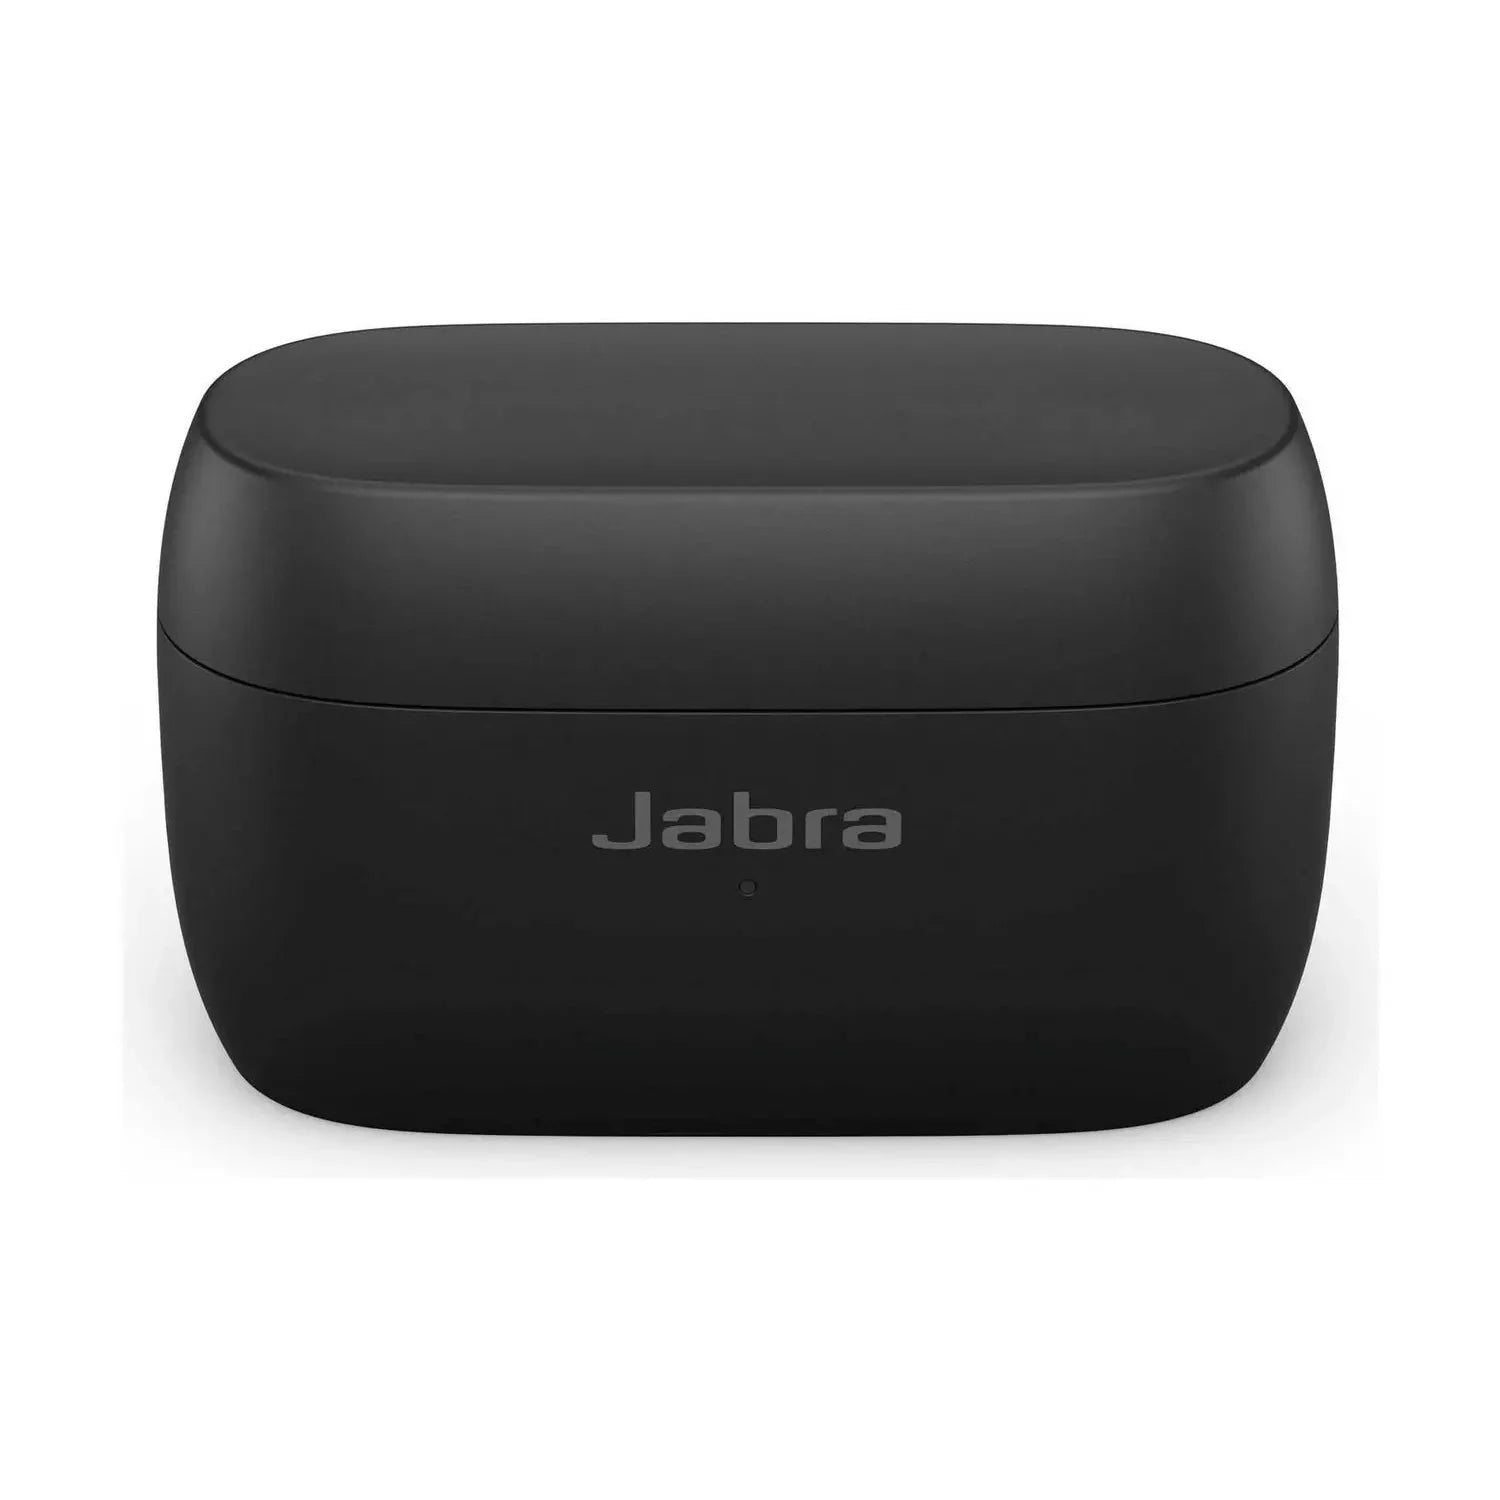 Jabra Elite 4 Active Wireless Bluetooth Noise-Cancelling Sports Earbuds - Black - Refurbished Excellent